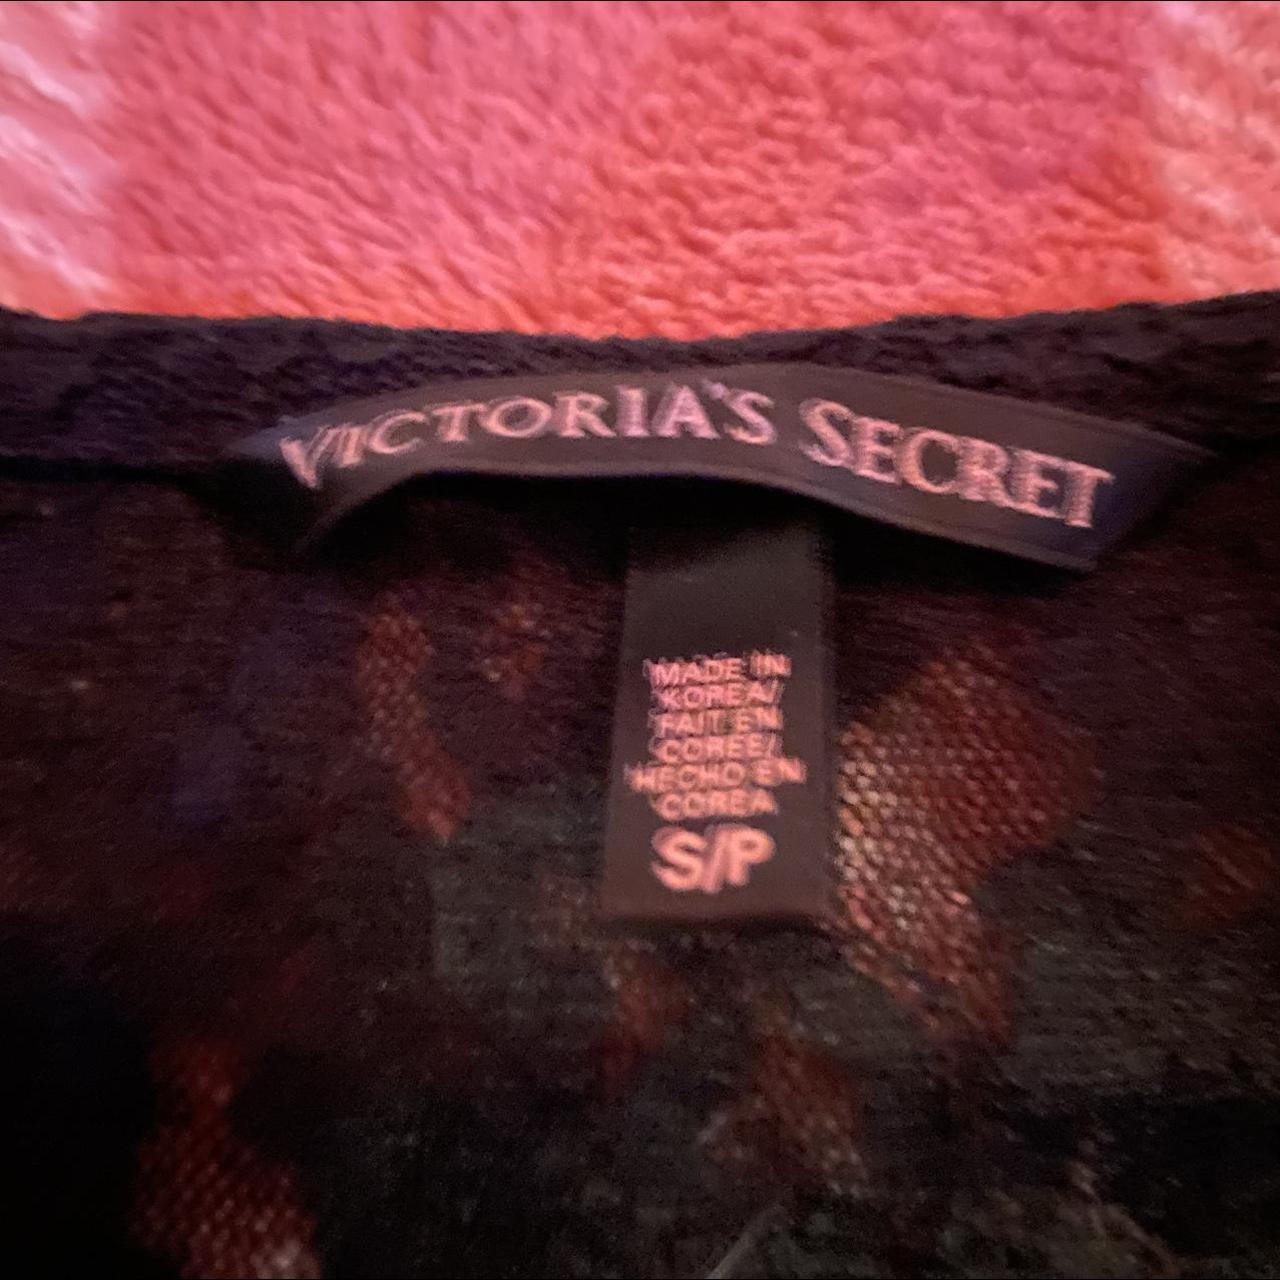 Victoria's Secret Women's Black Shirt | Depop